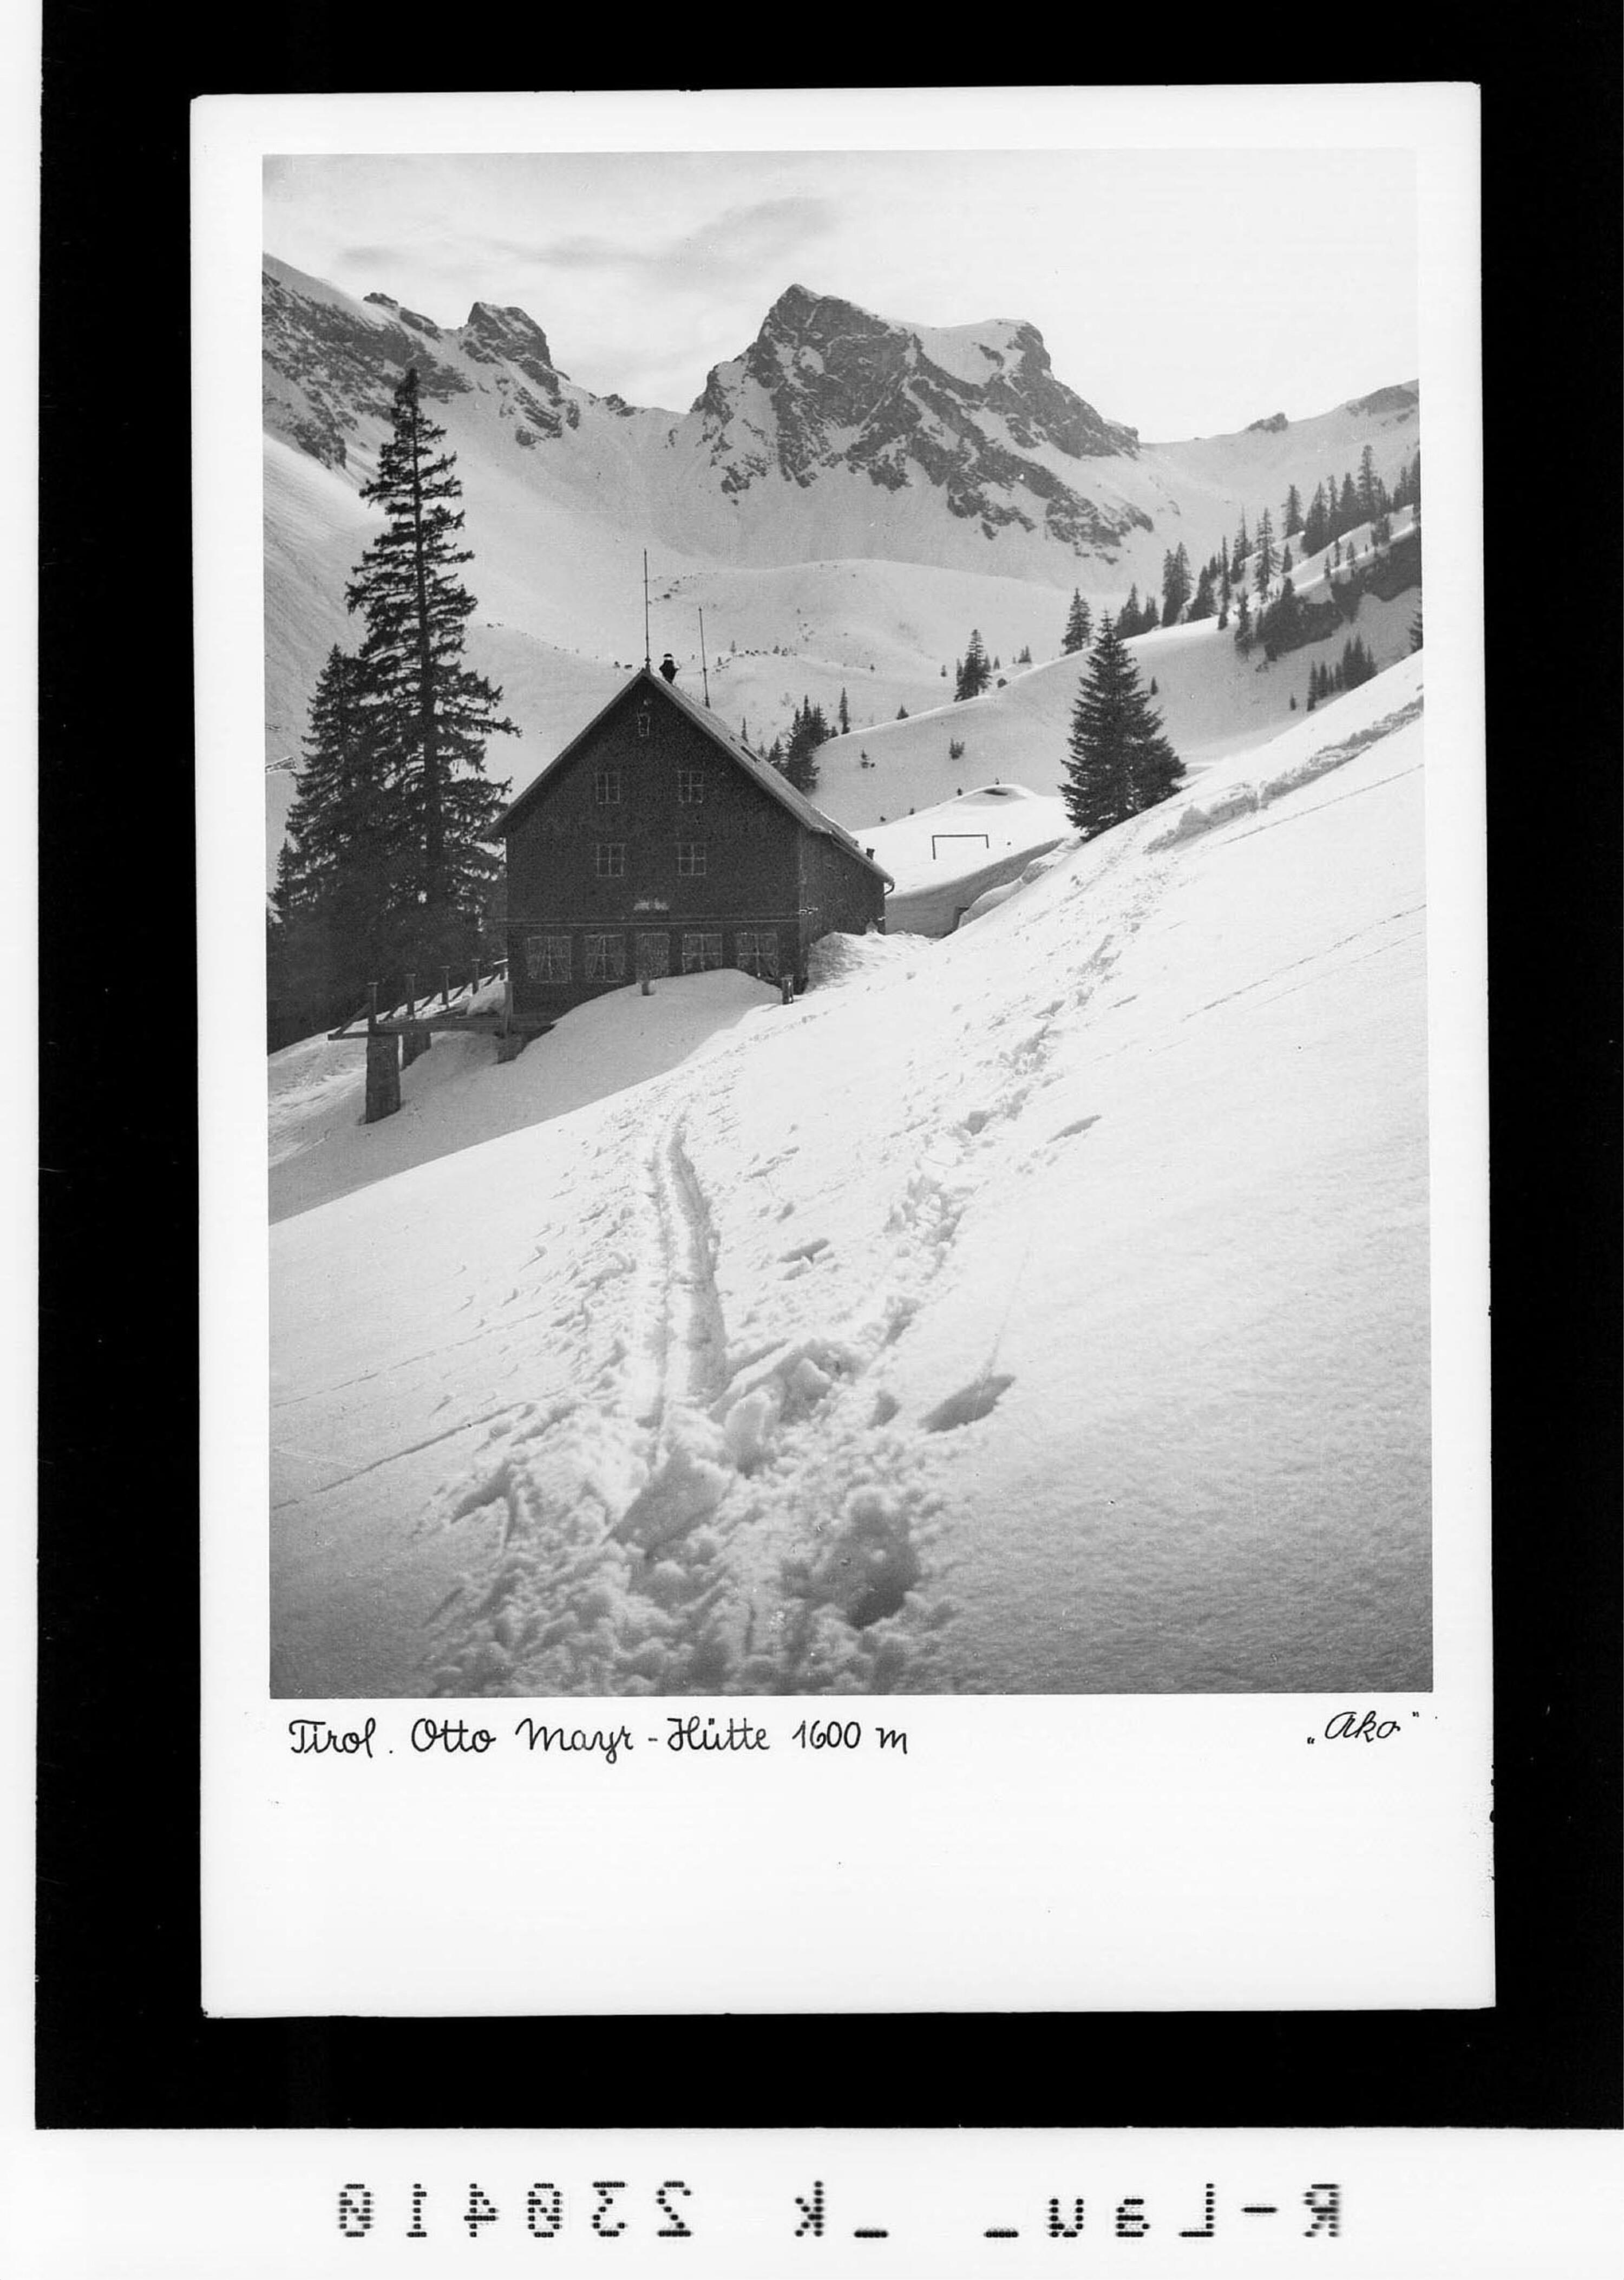 Tirol / Otto Mayr Hütte 1600 m></div>


    <hr>
    <div class=